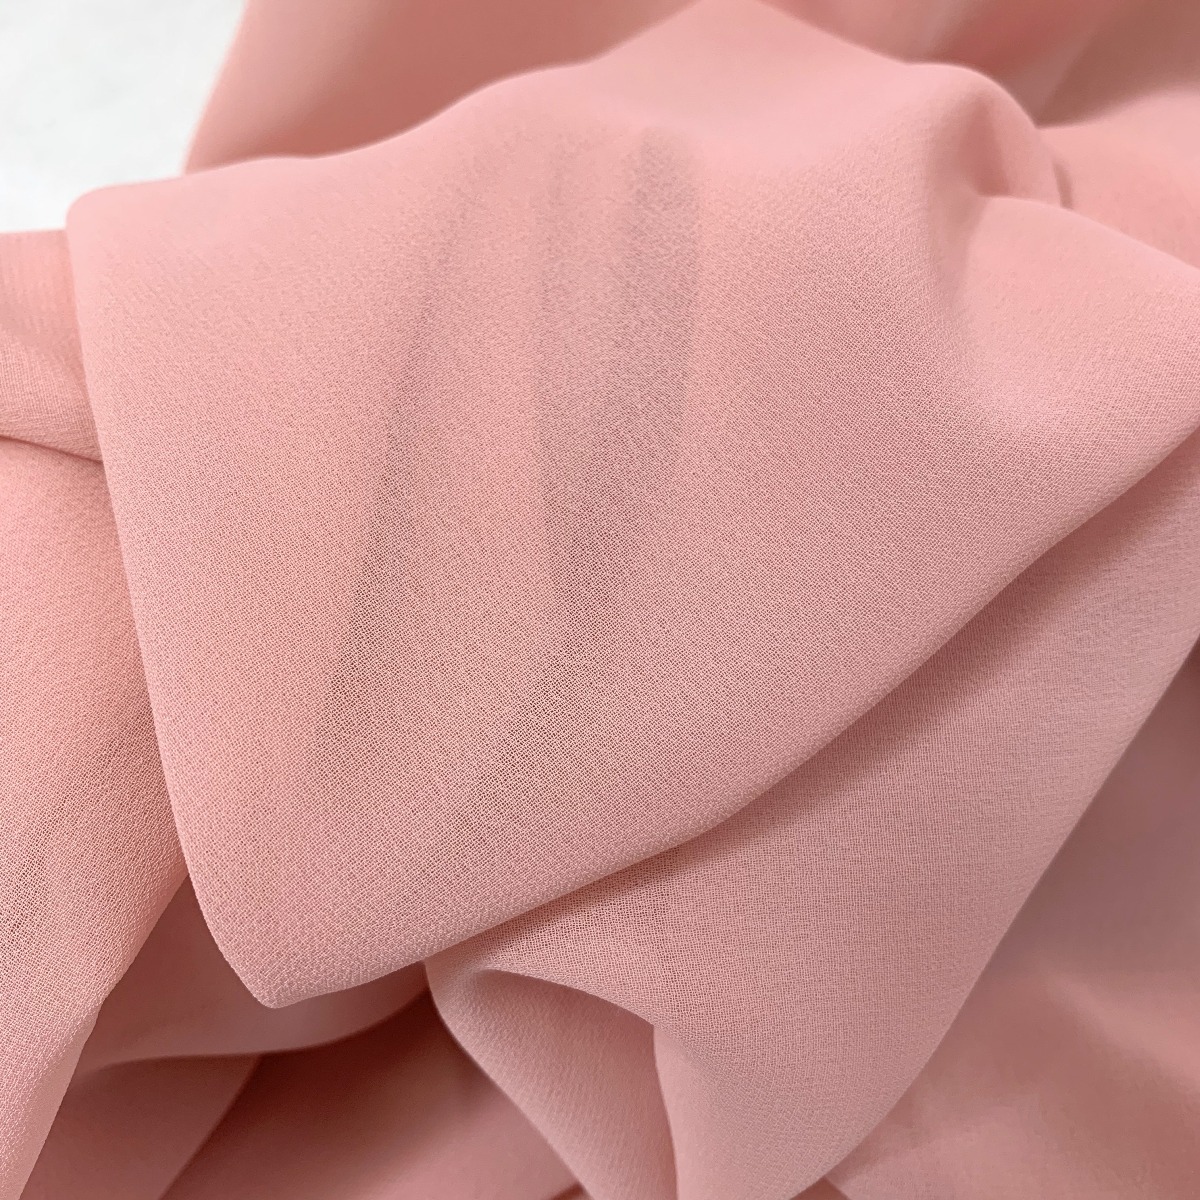 Chiffon Soft Touch Sheer Fabric Material- Pink Blush Q354 PNBSH